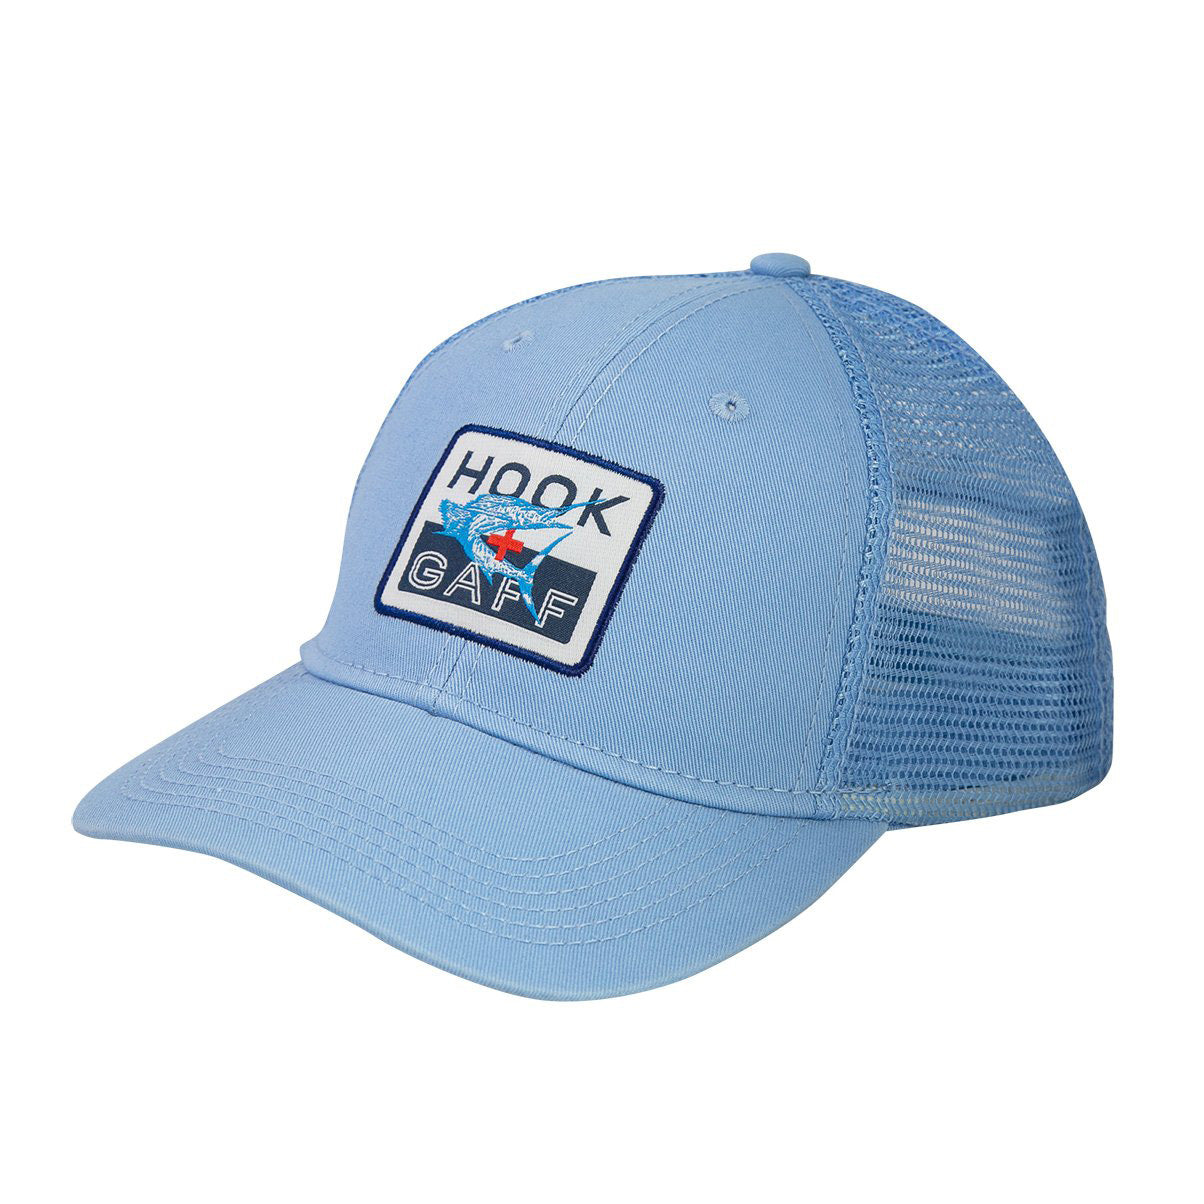 Mesh Hat | Trucker Hat | Hook+Gaff Light Blue Hat